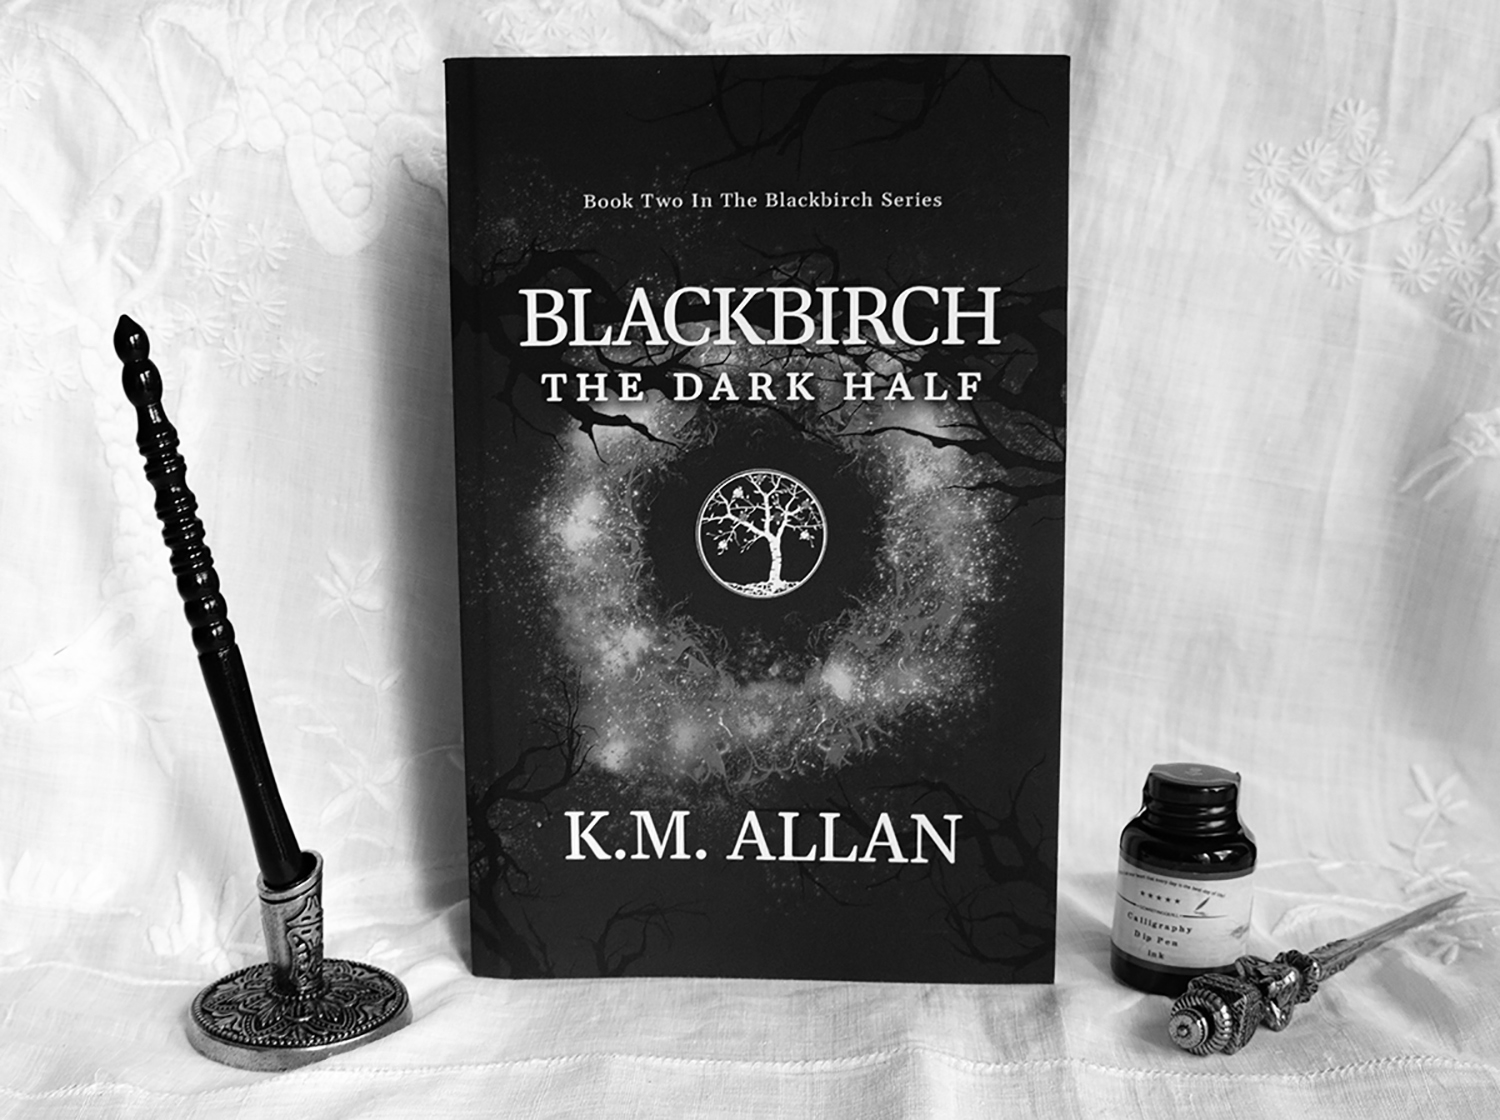 The Dark Half by K.M Allan